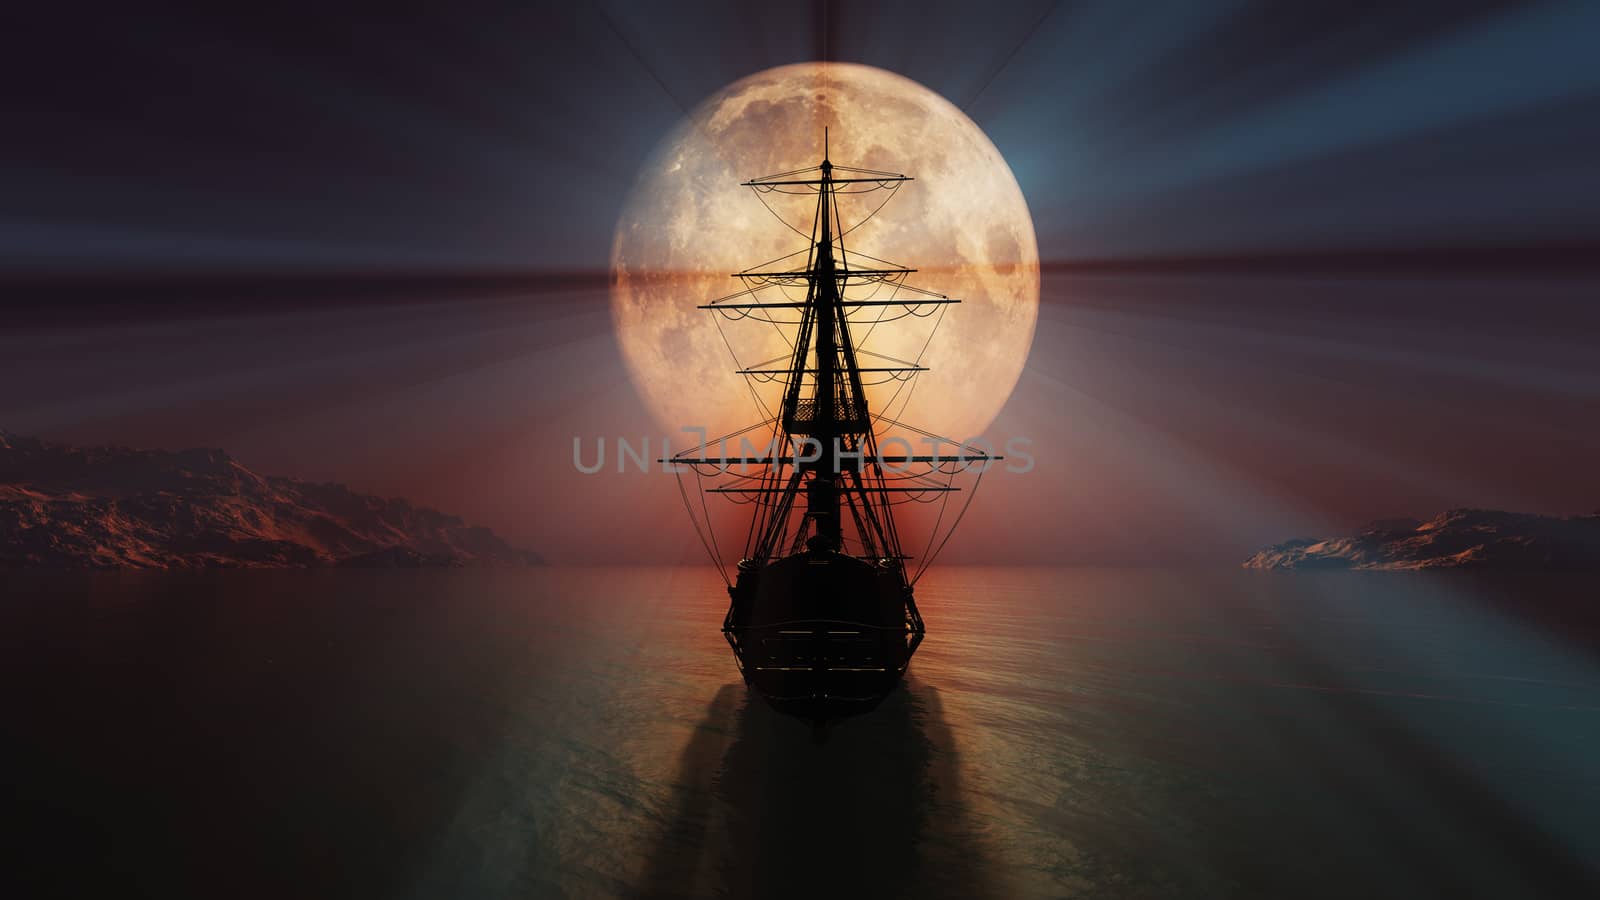 old ship in the night full moon 3d render illustration